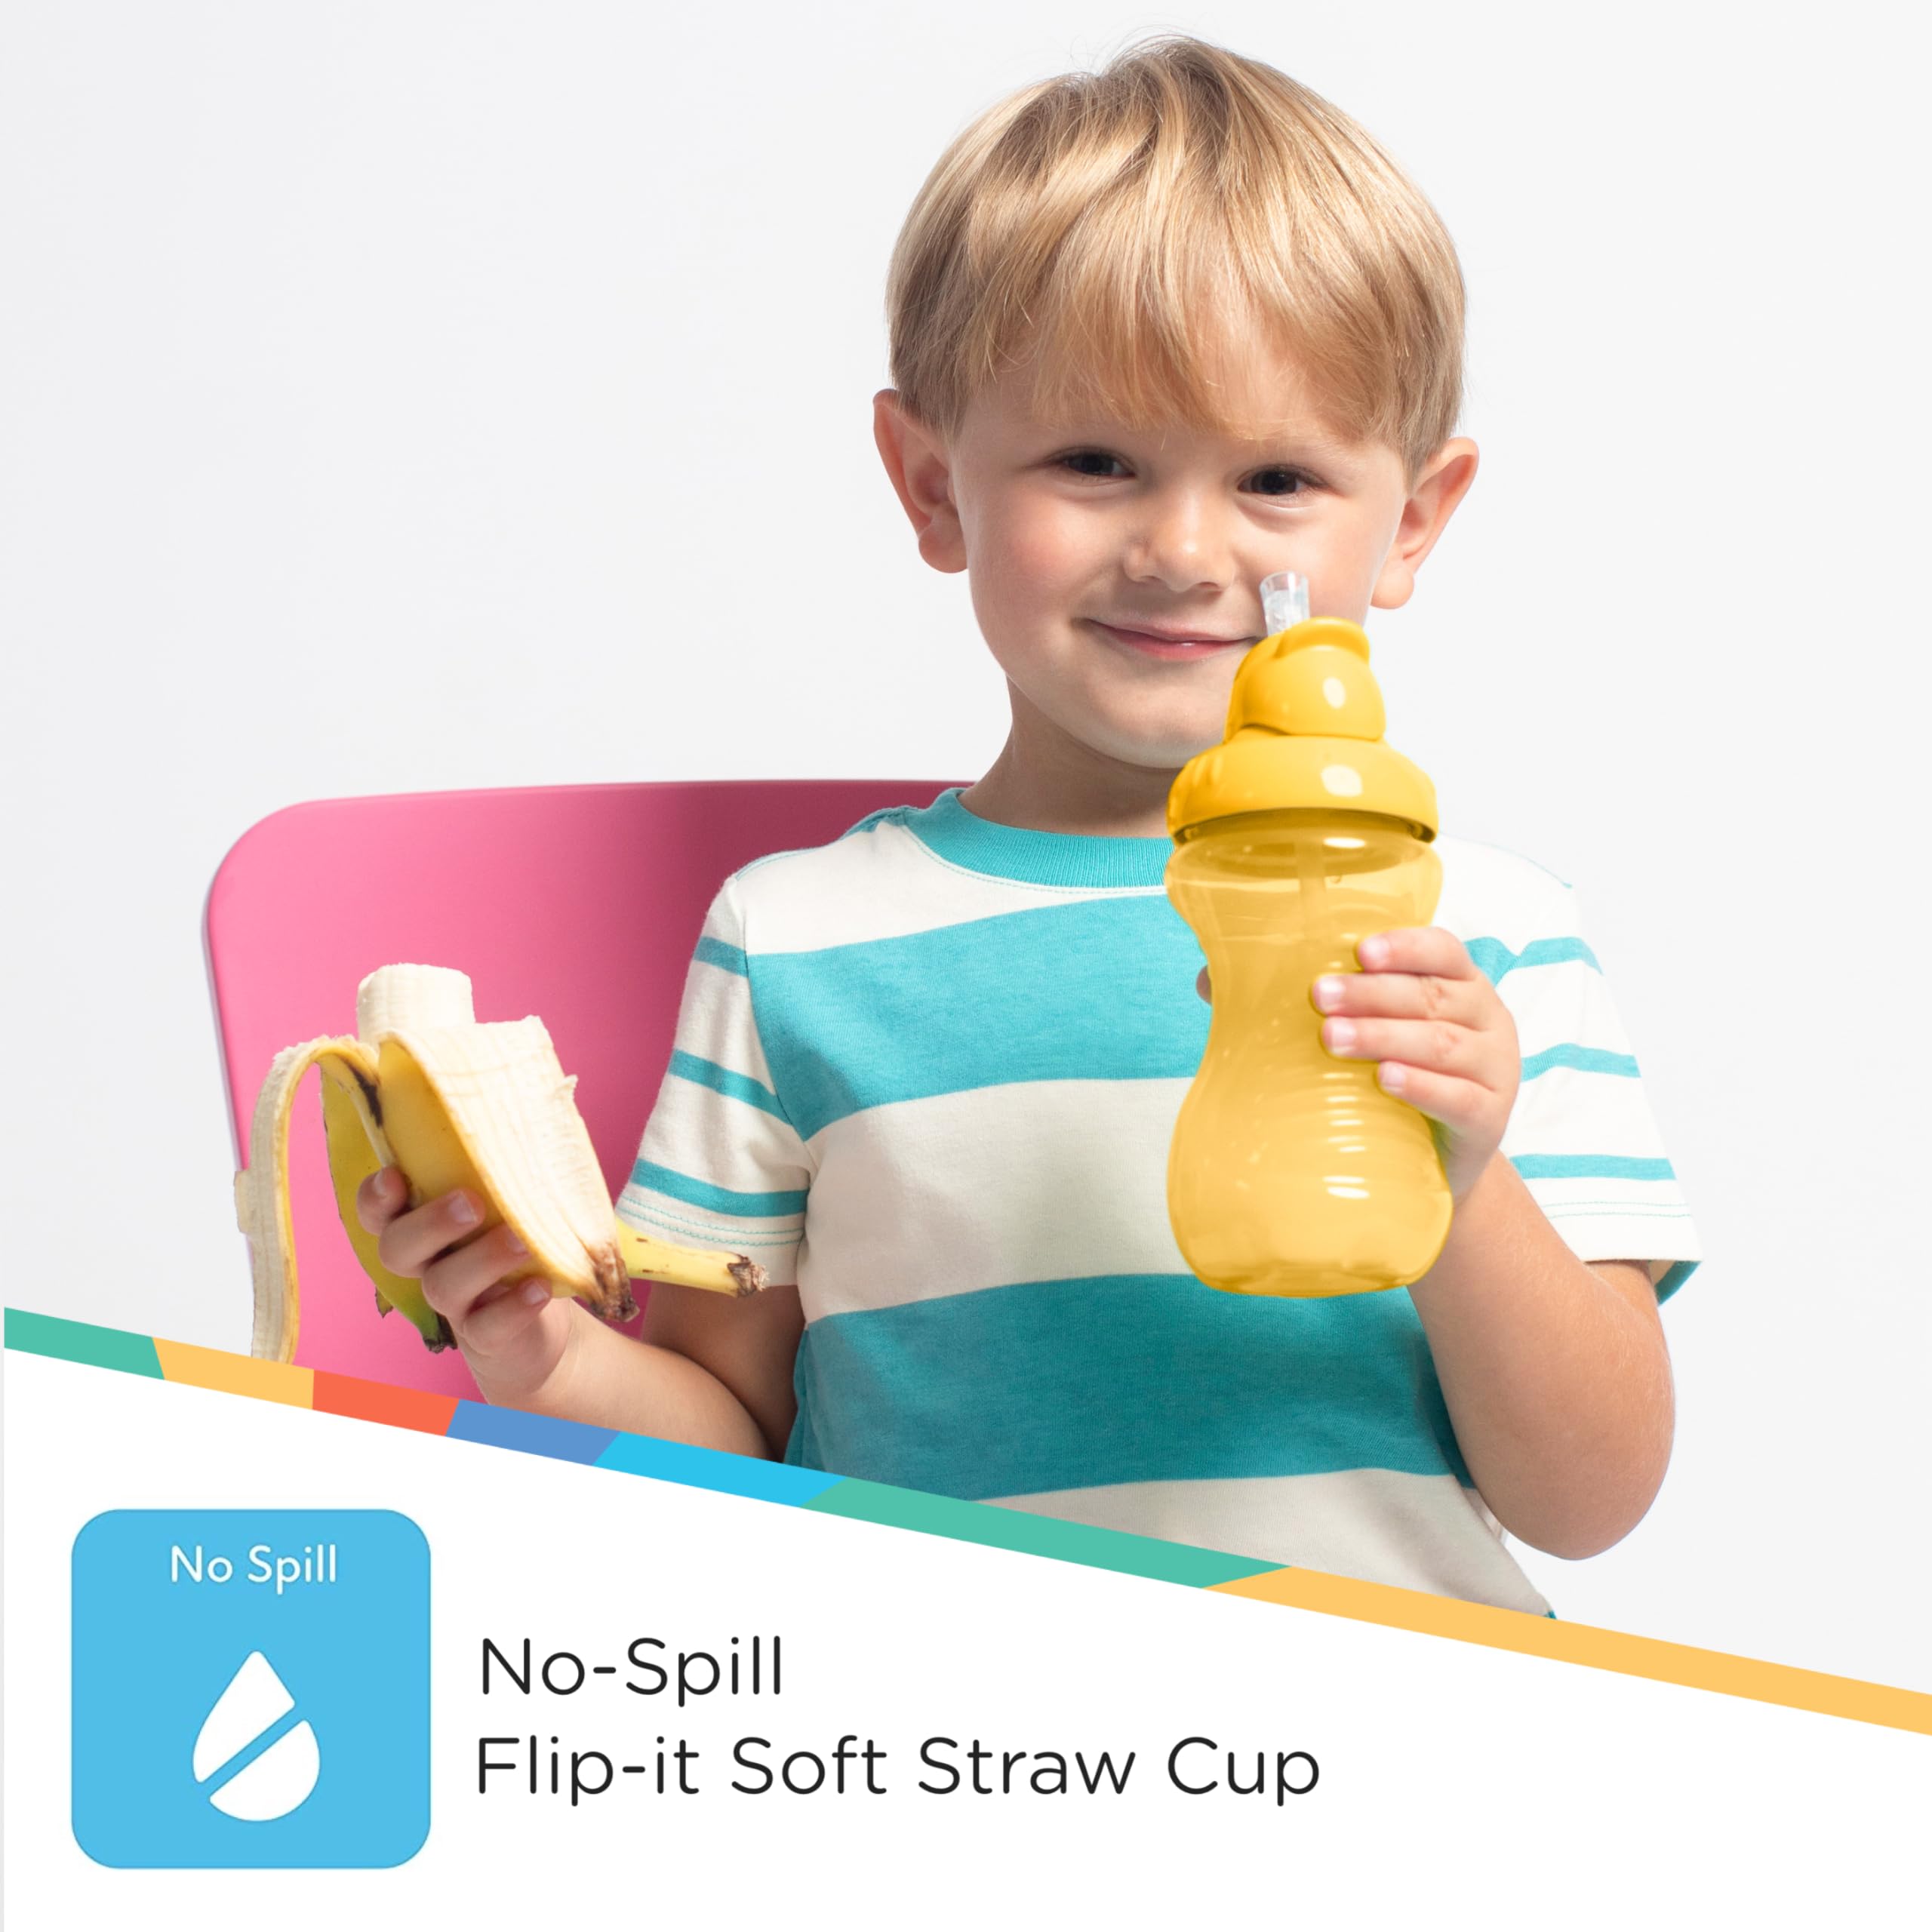 Nuby 3-Pack No-Spill Flip-It Soft Straw Cups, 10oz, 3 PK - Aqua, Coral, Yellow